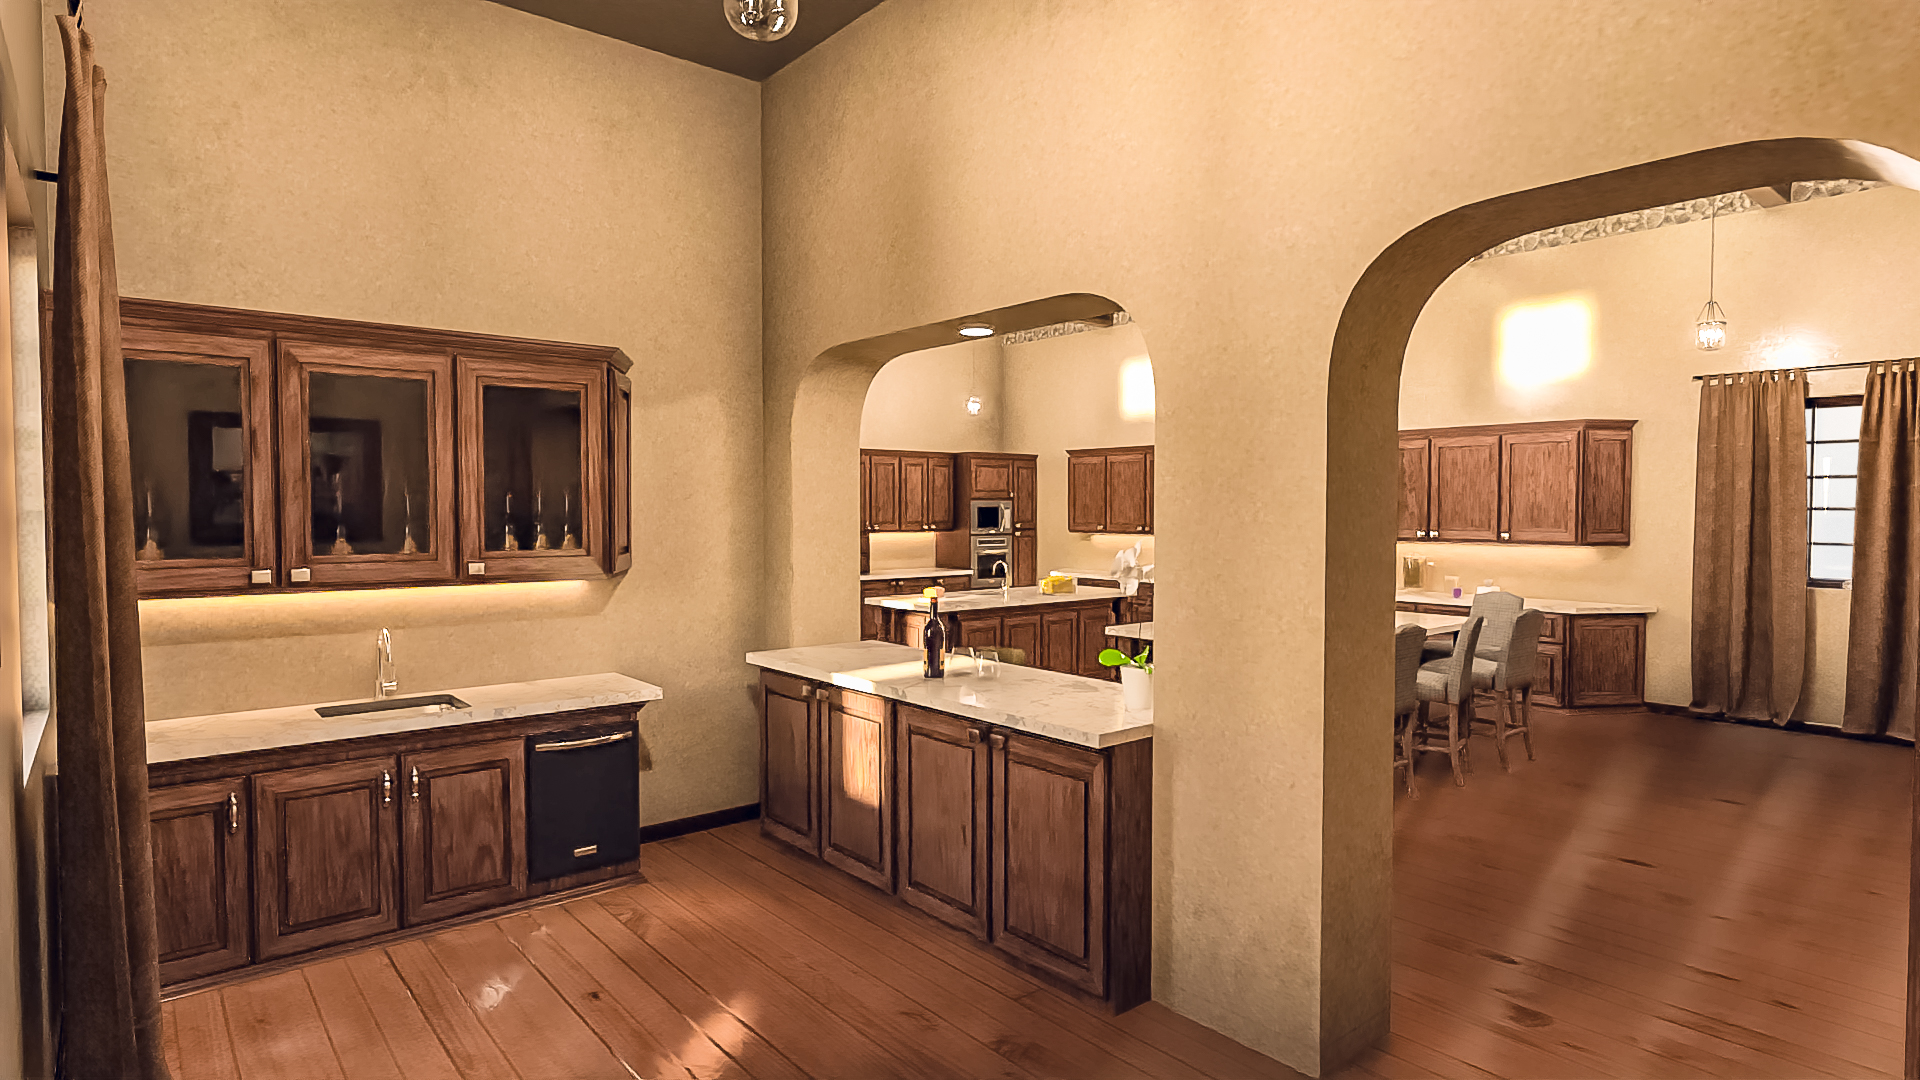 Lencino Kitchen Space by: Tesla3dCorp, 3D Models by Daz 3D